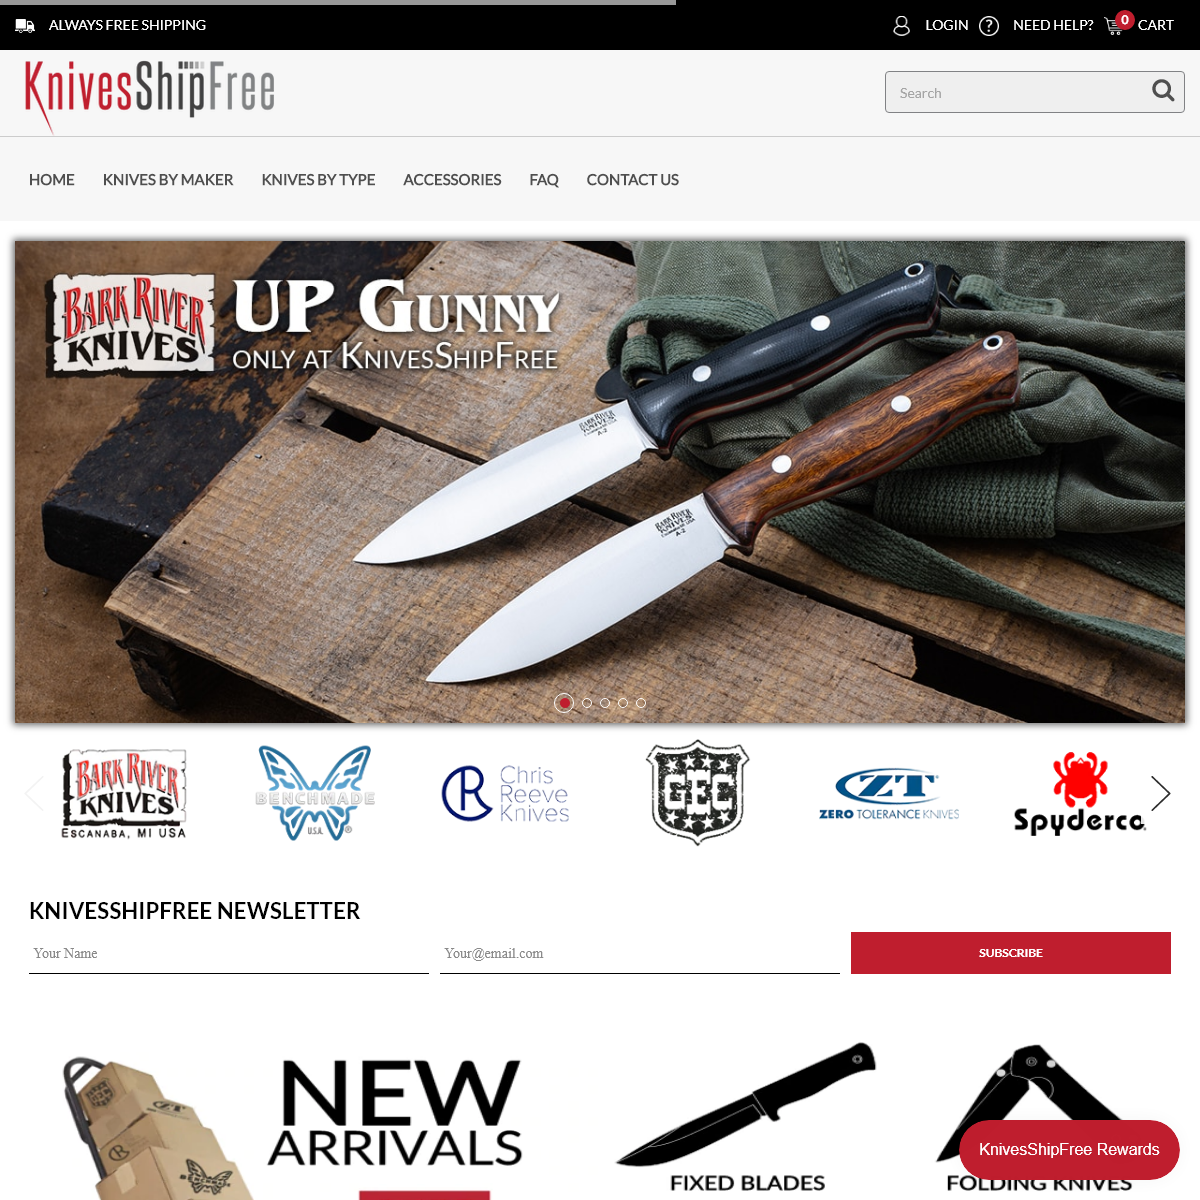 A complete backup of knivesshipfree.com